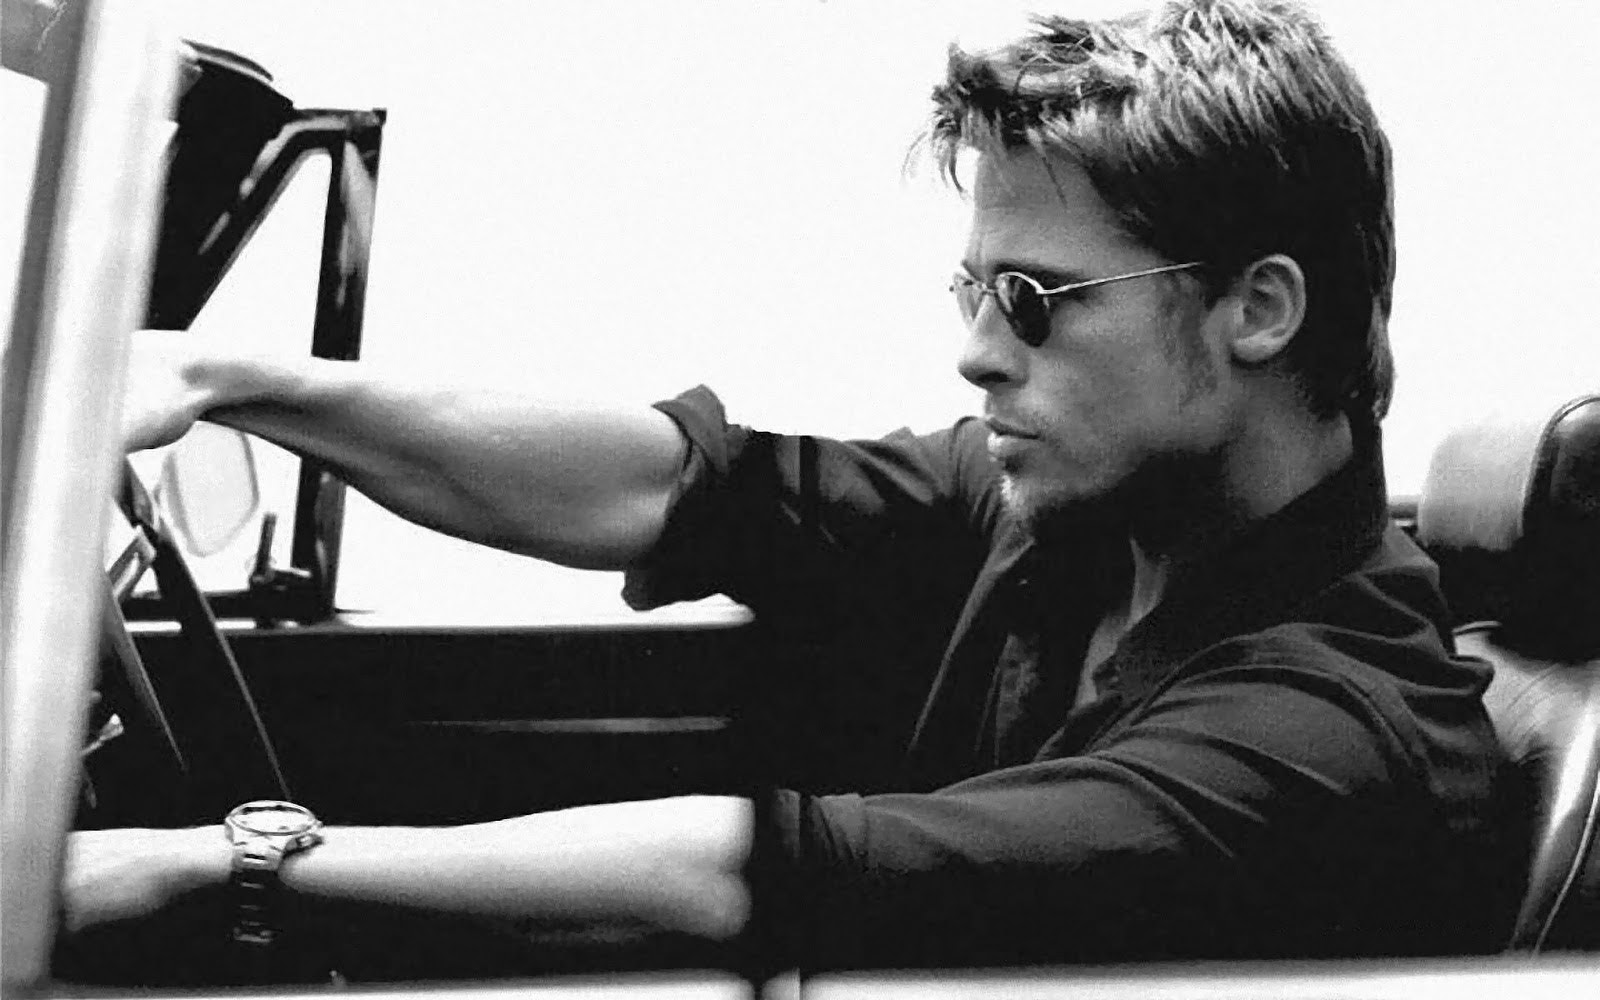 Brad Pitt HD Wallpapers